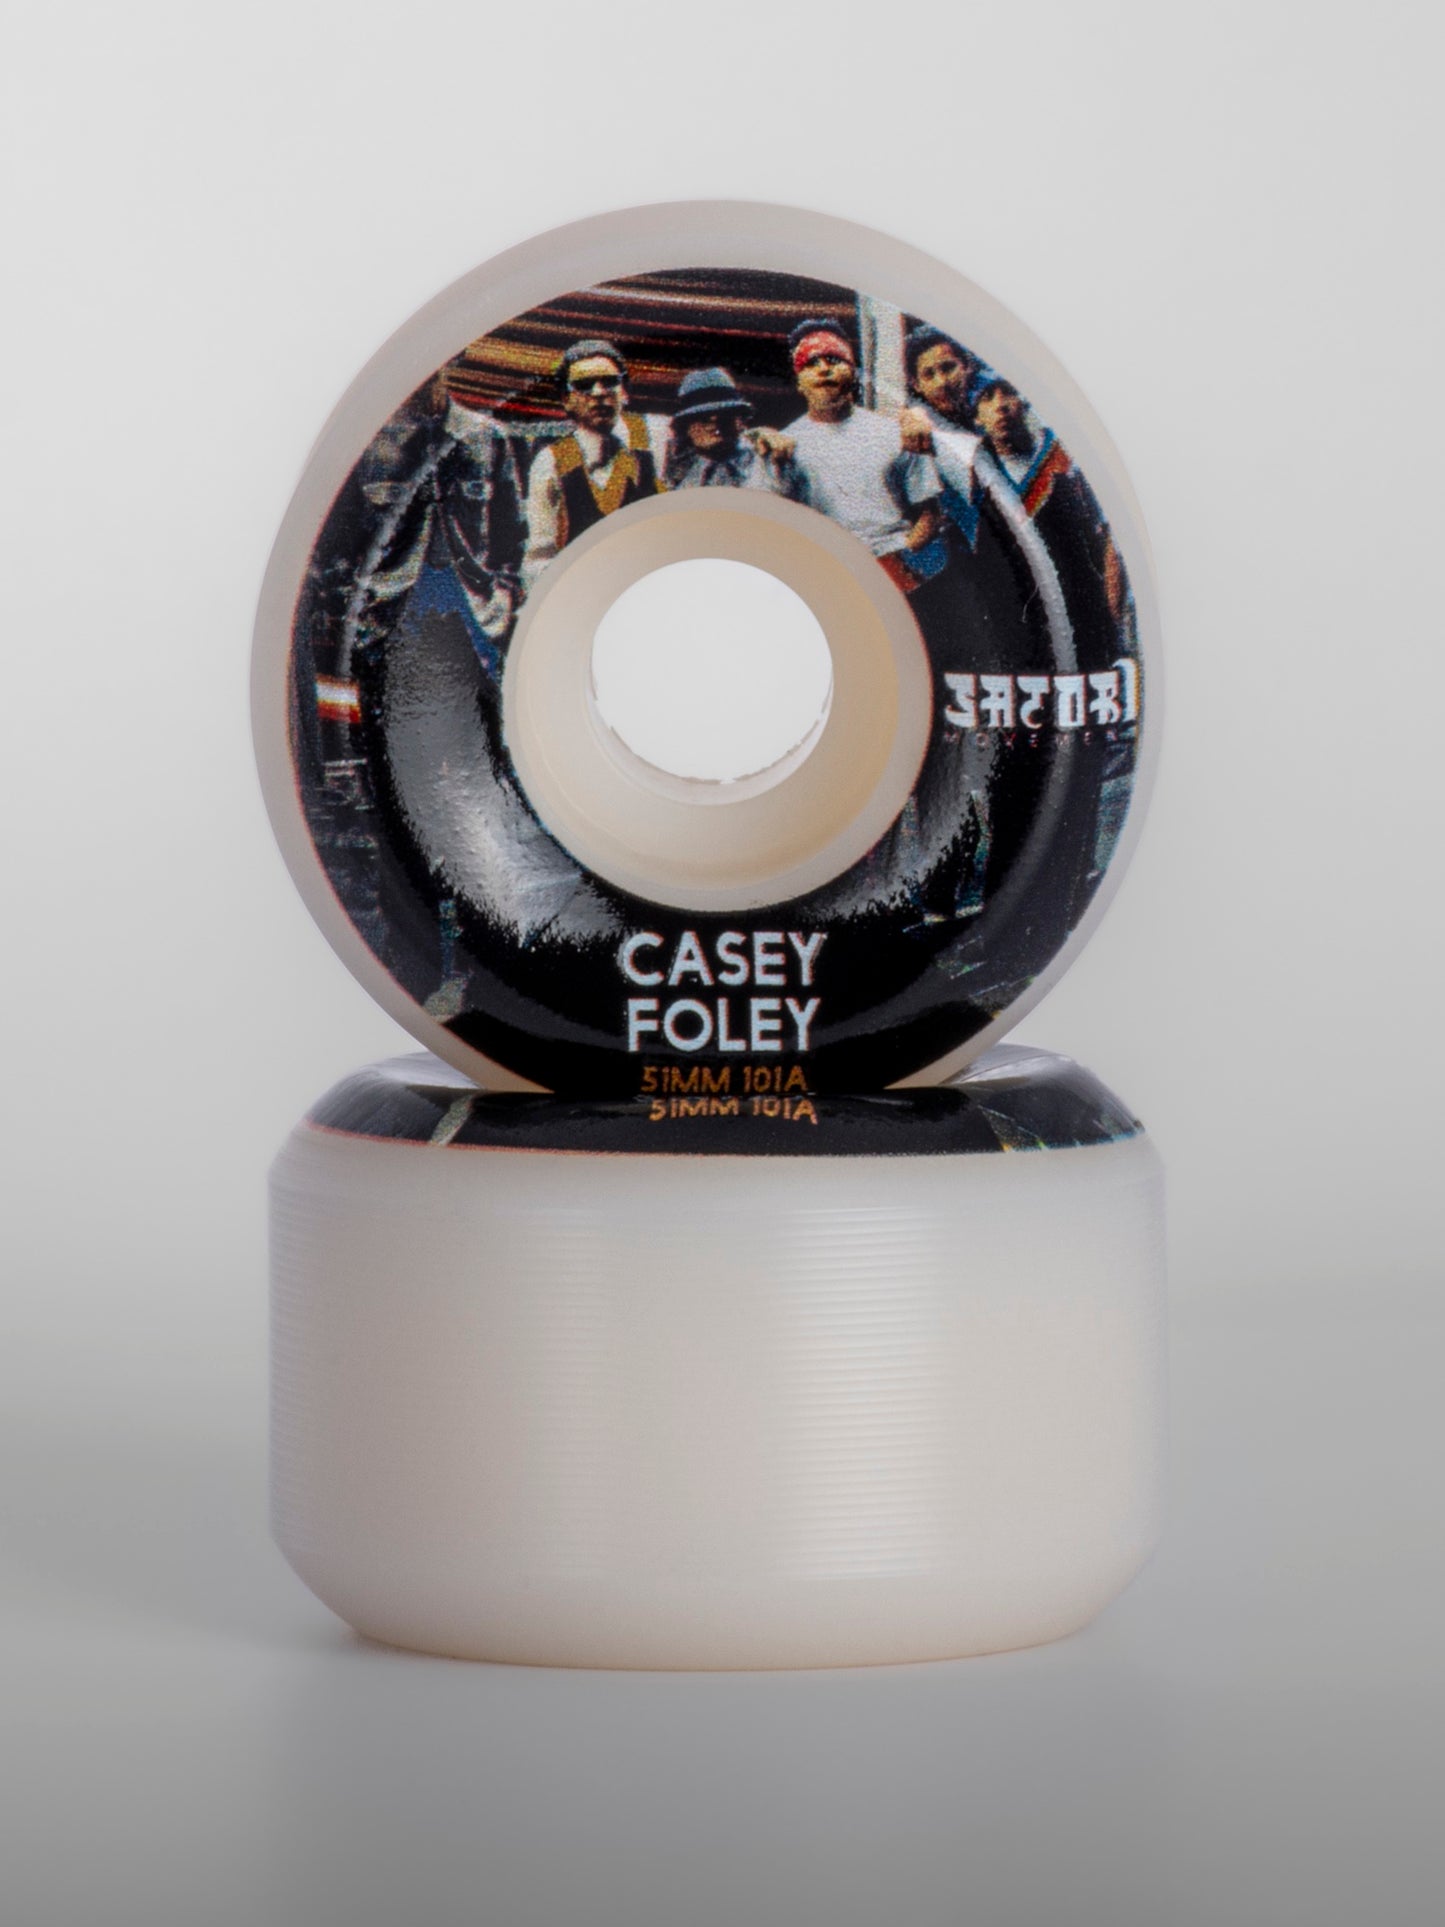 SATORI Artist Series Wheels - Casey Foley 51mm/101a